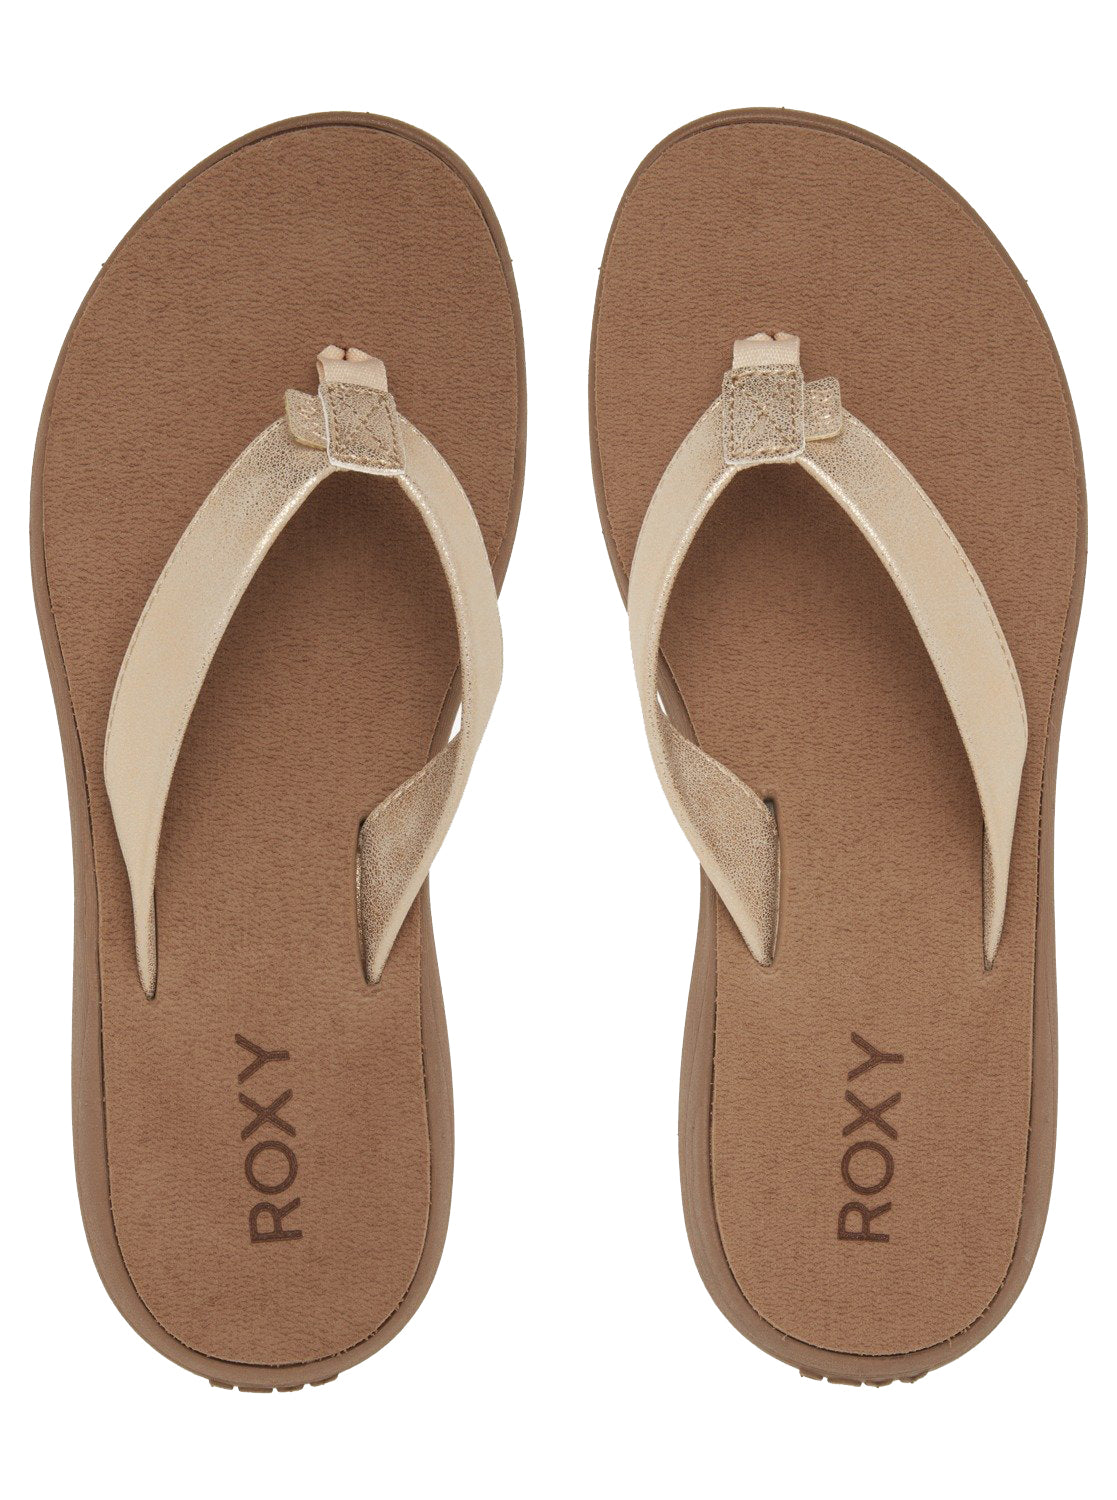 Roxy Lizzie Womens Sandal BRO-Bronze 5